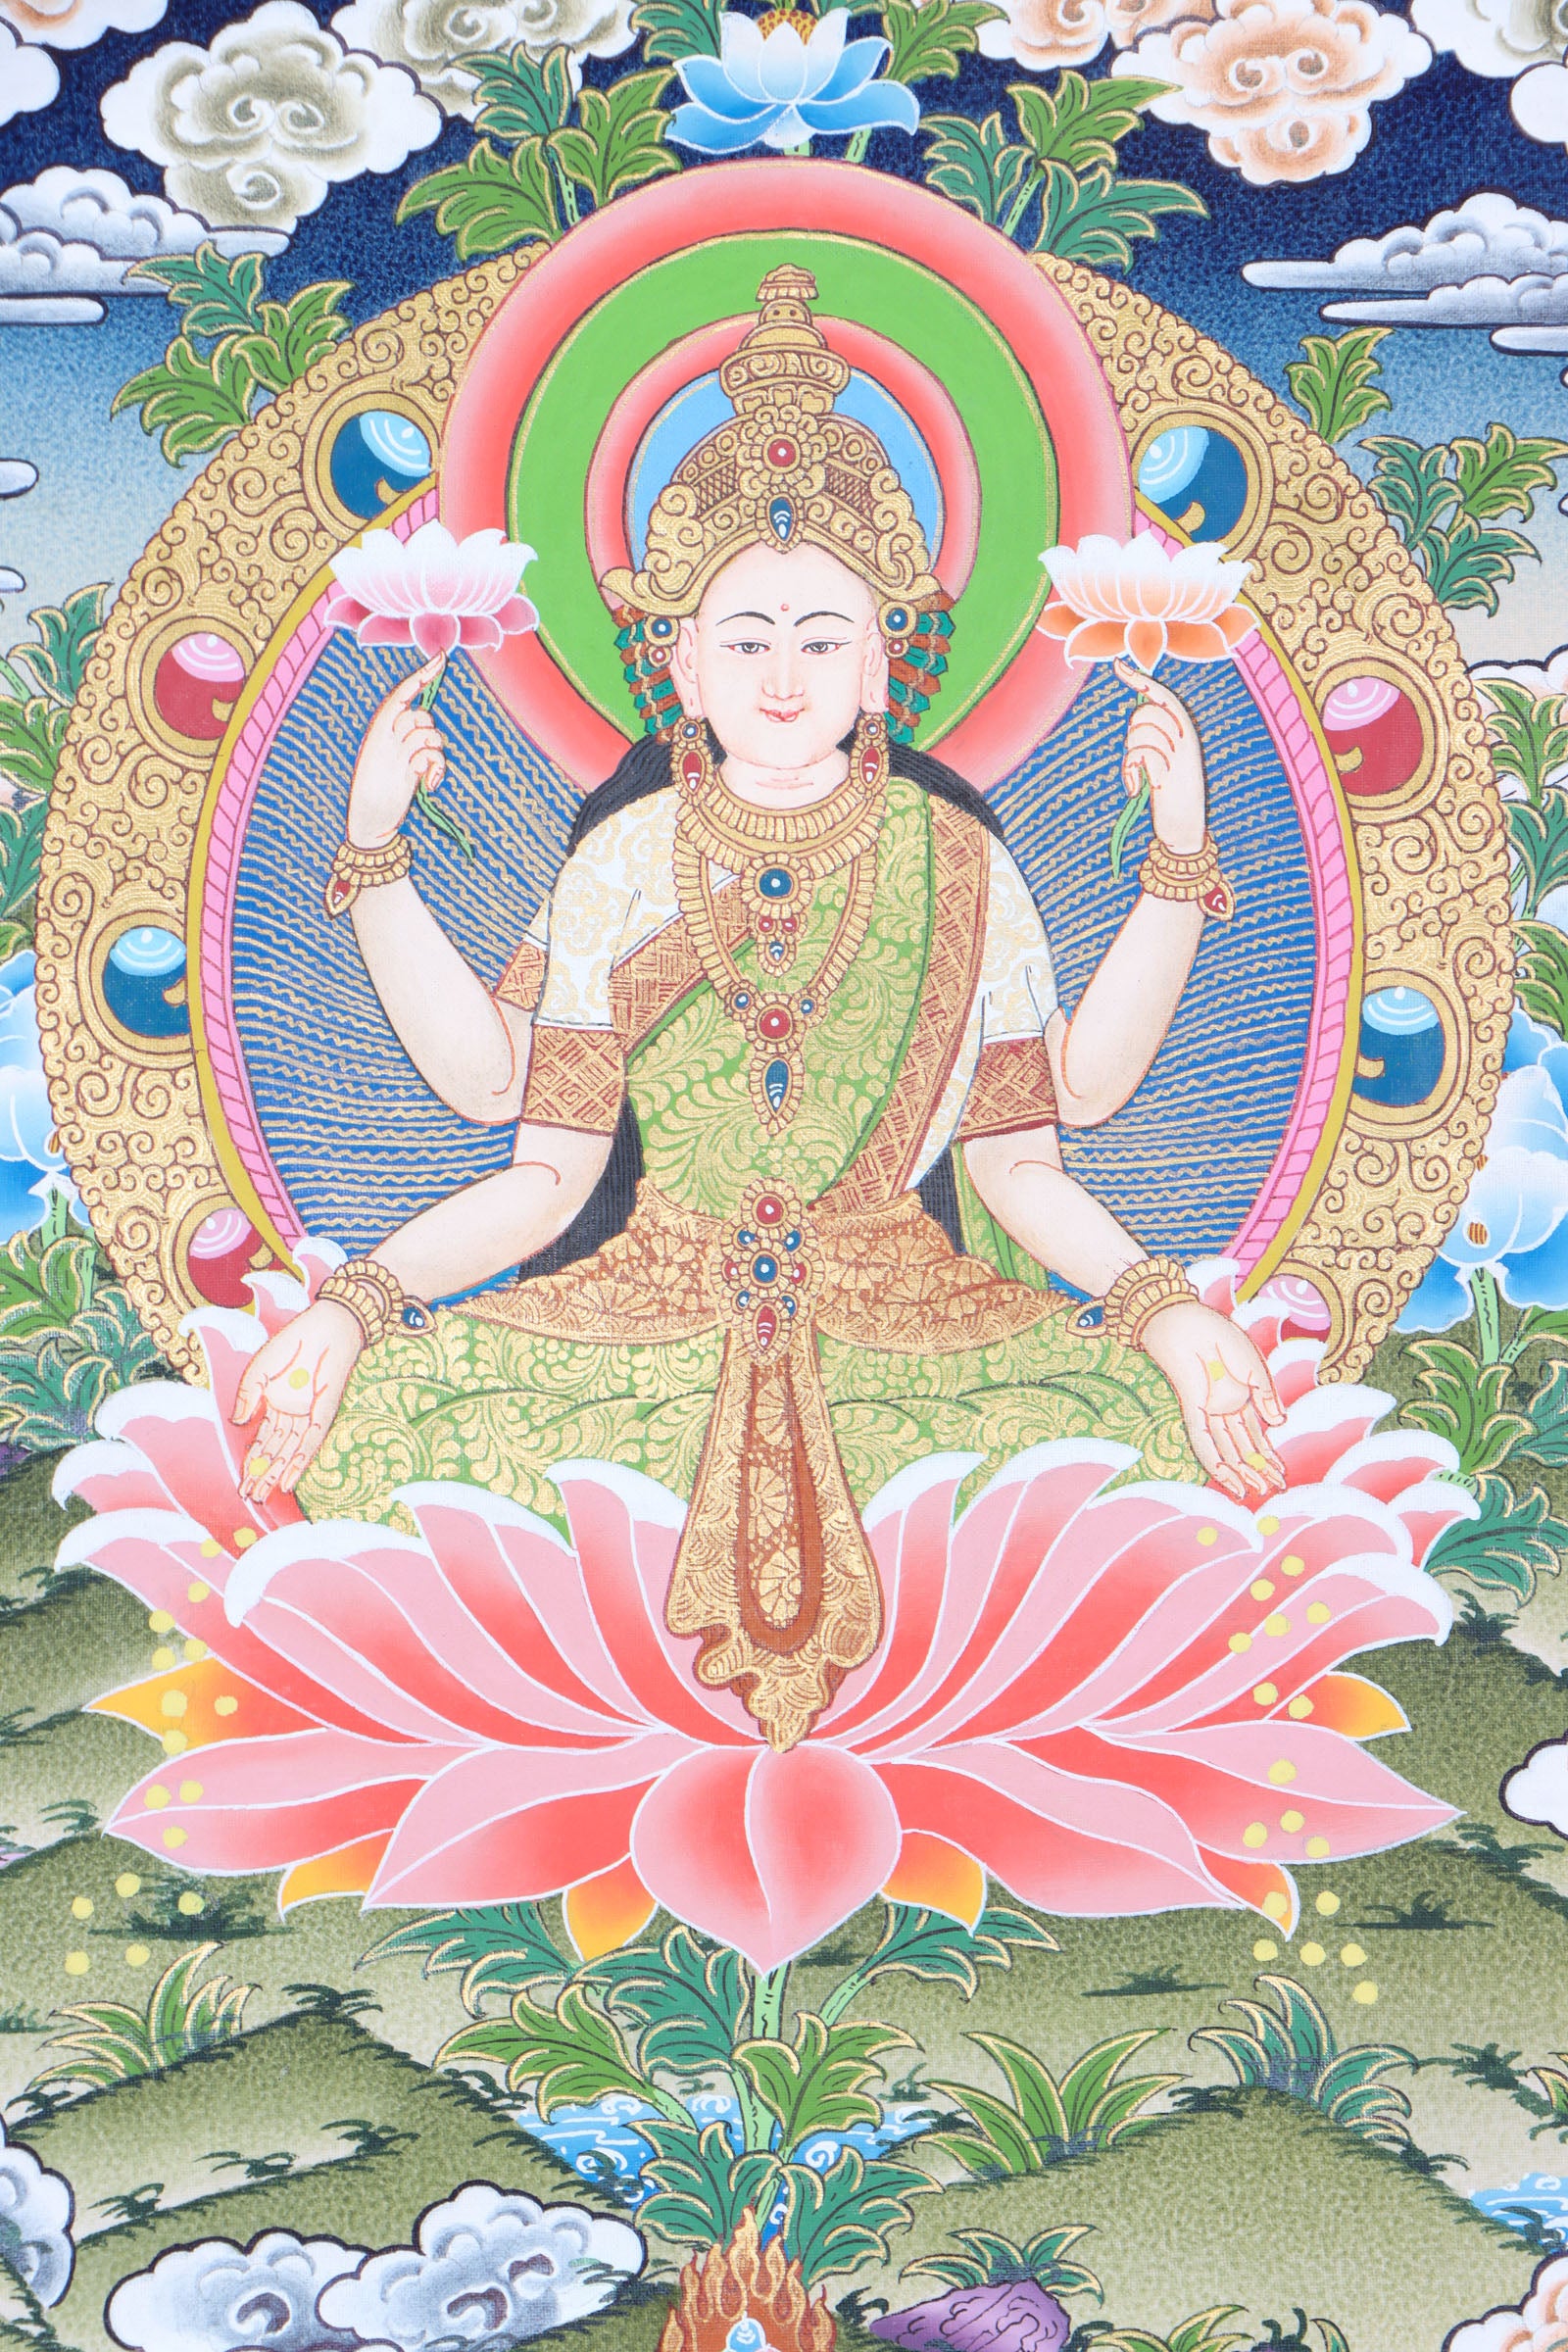 Laxmi Thangka for wealth and prosperity.